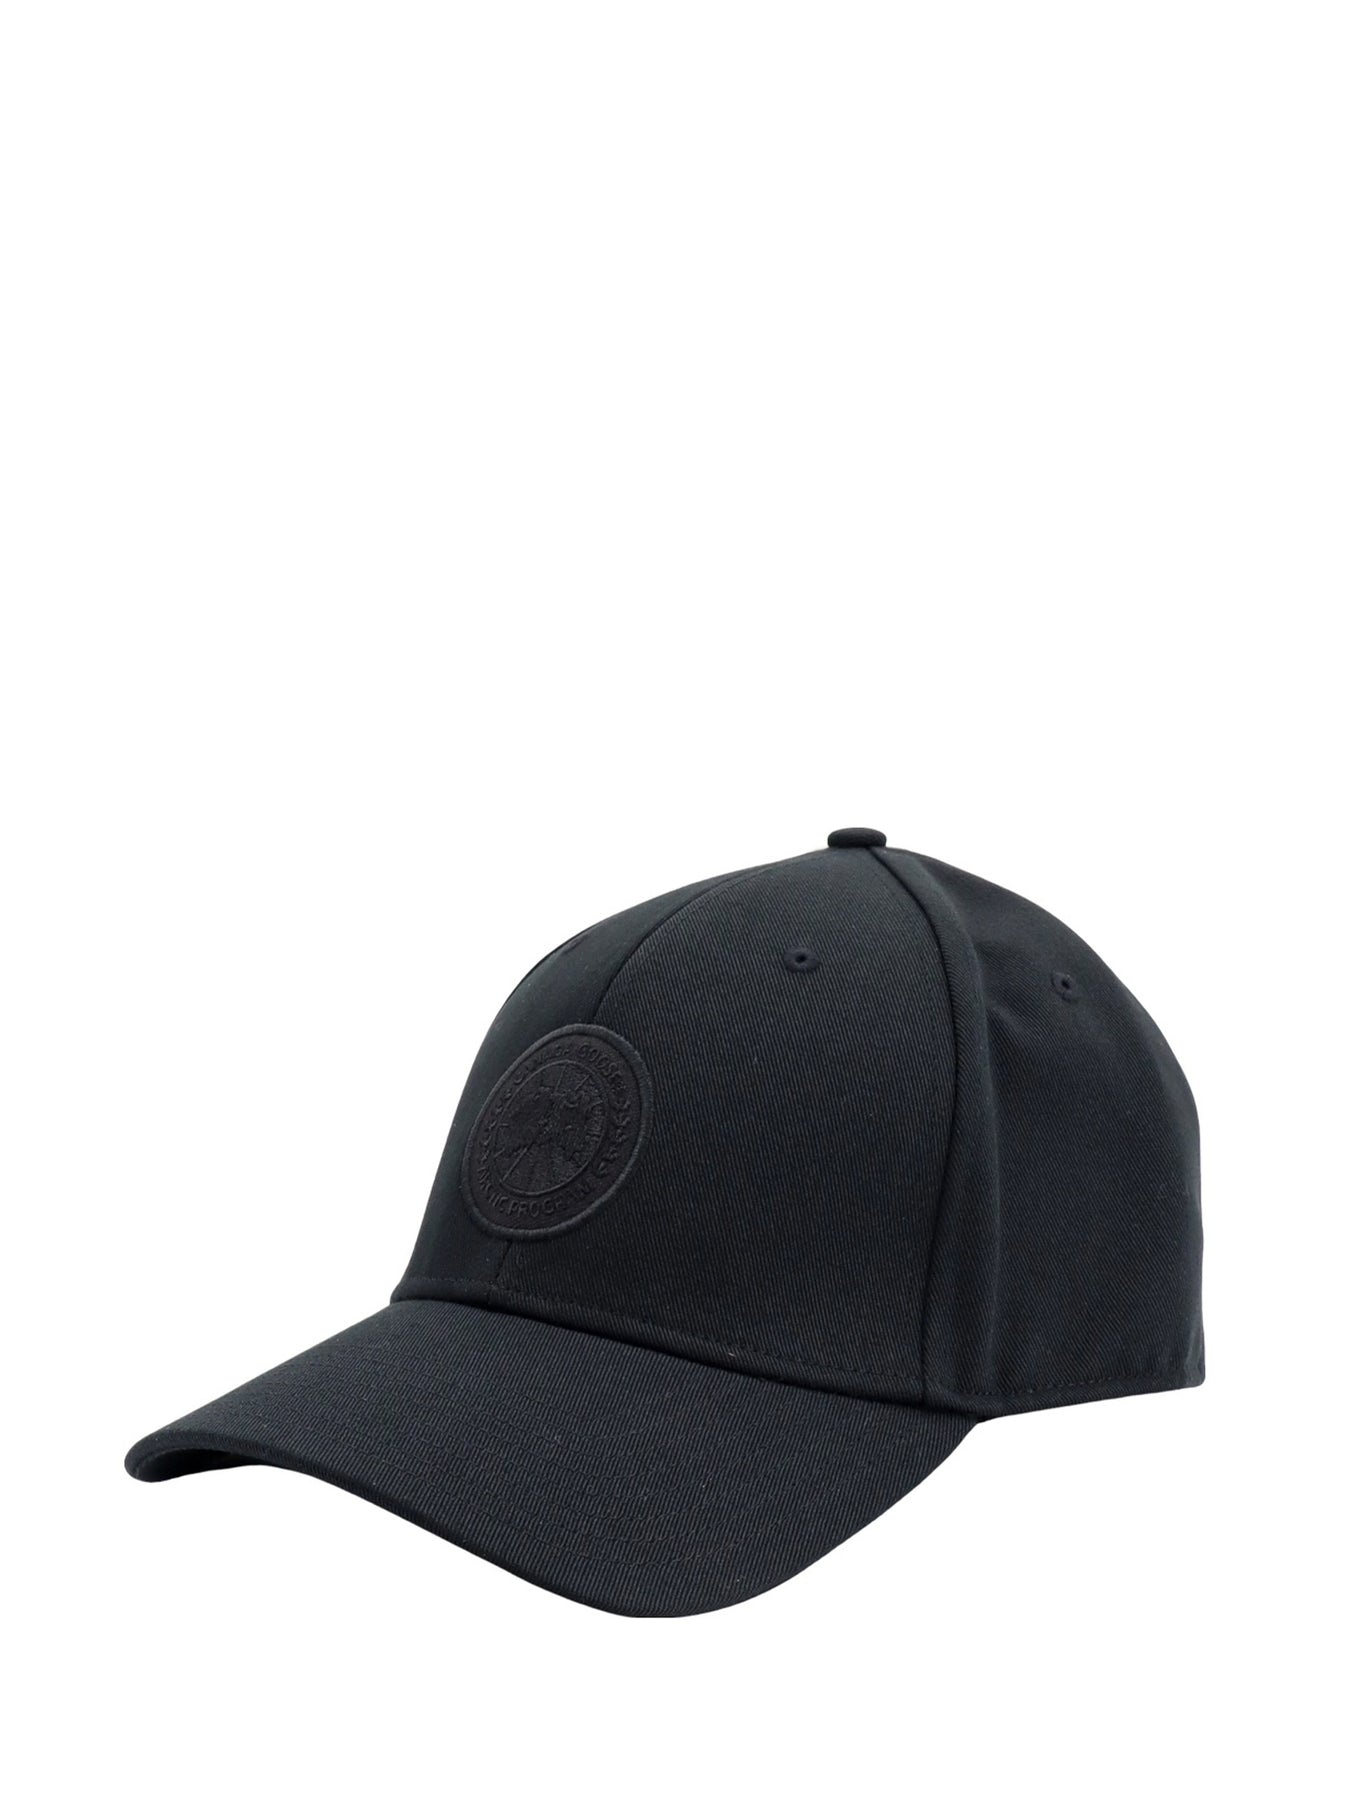 Jersey hat - 3